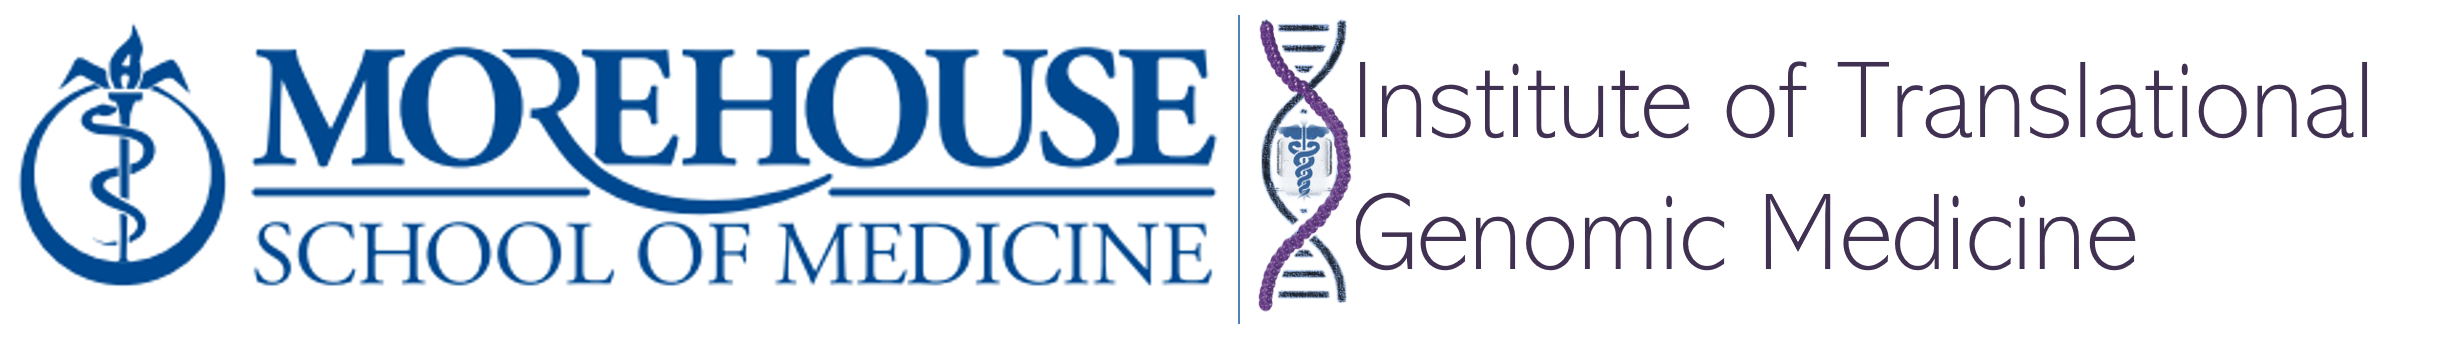 Morehouse School of Medicine - Institute of Translational Genomic Medicine logo